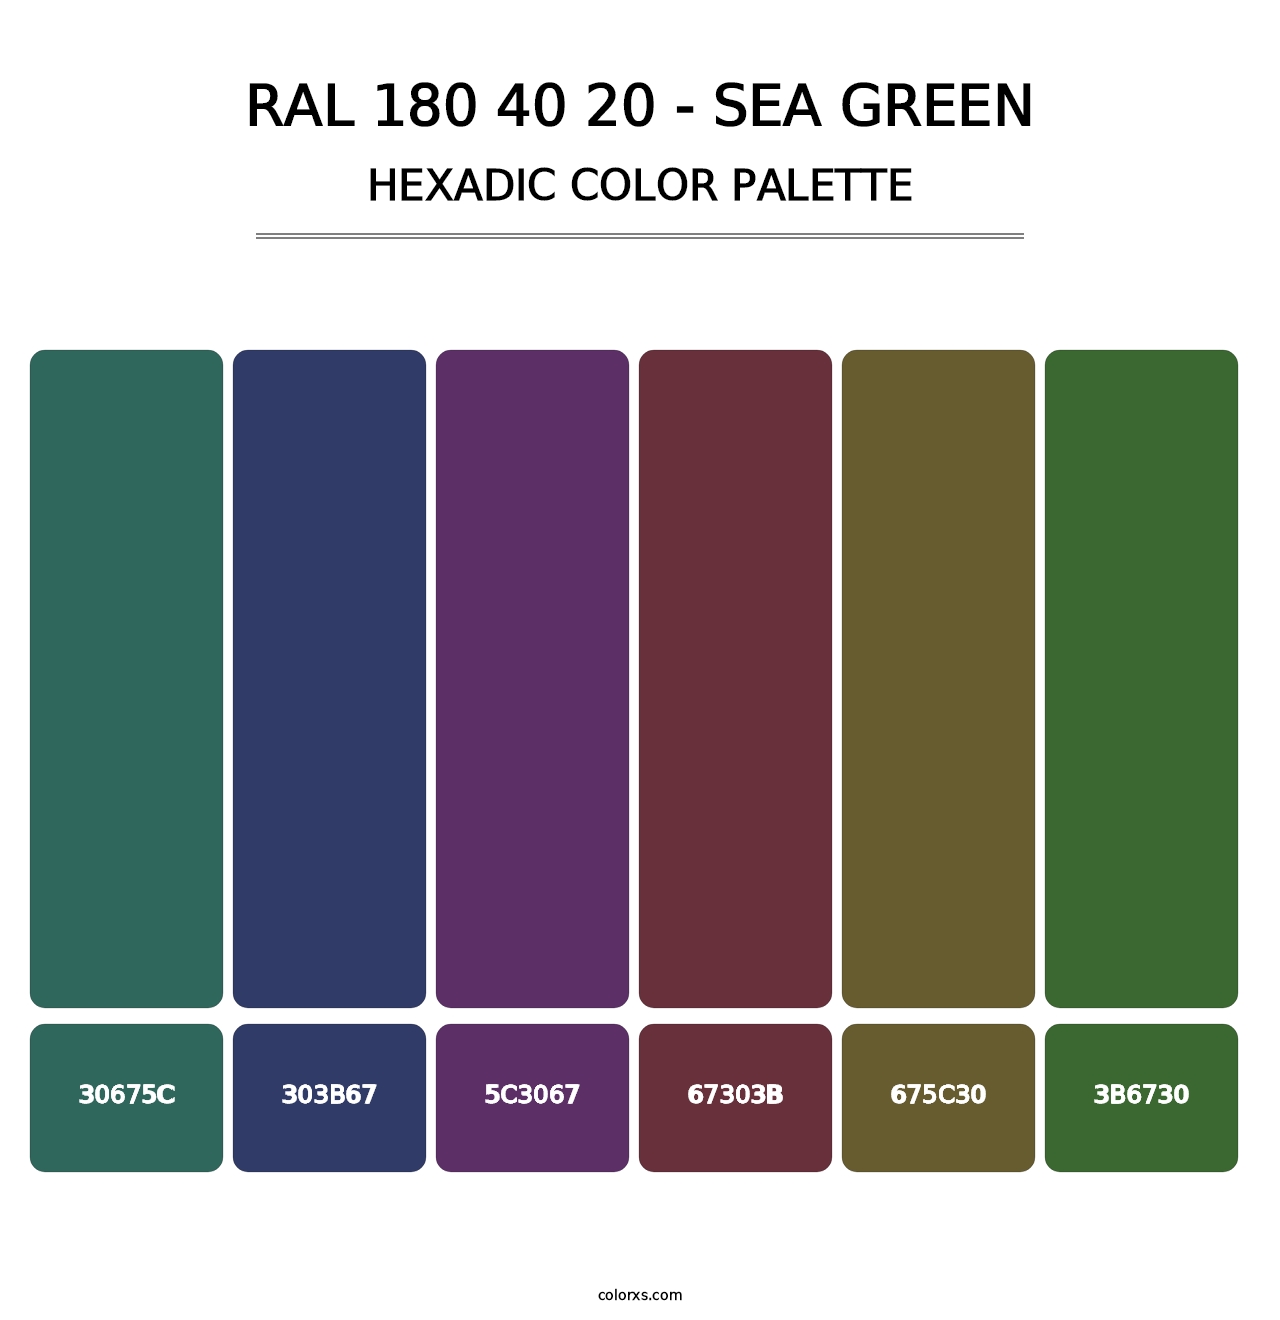 RAL 180 40 20 - Sea Green - Hexadic Color Palette